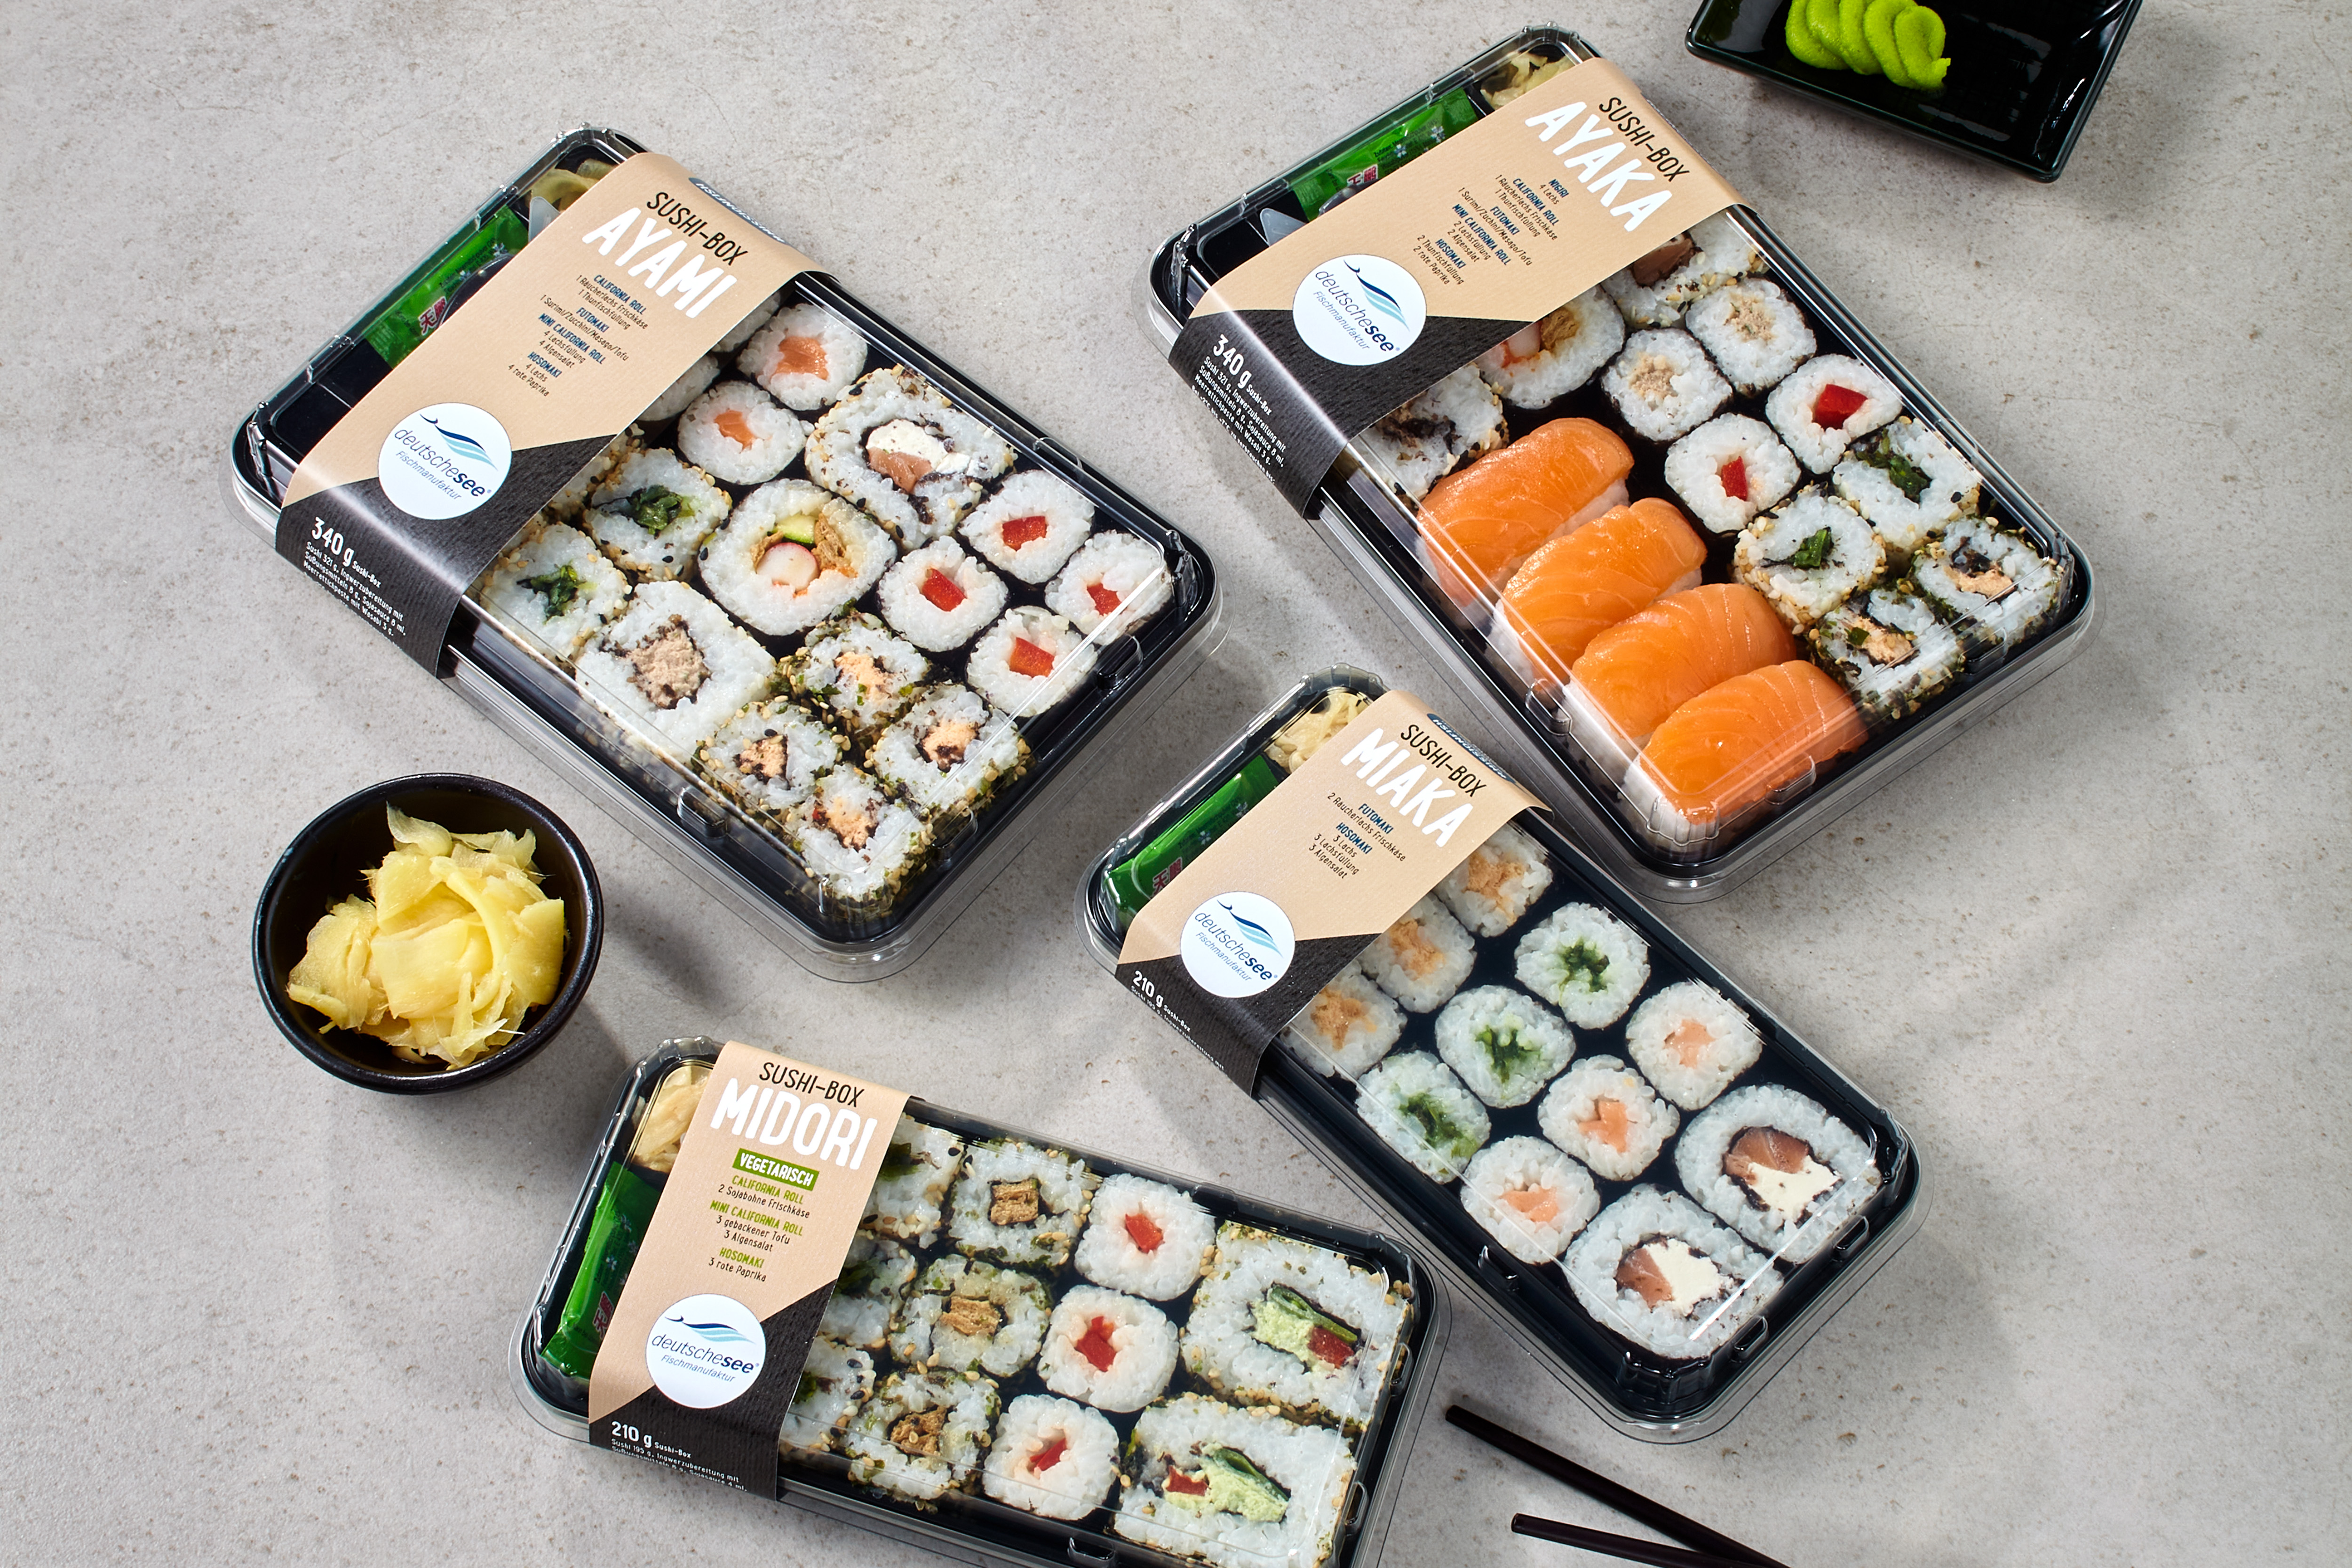 Sushi-Box AYAKA